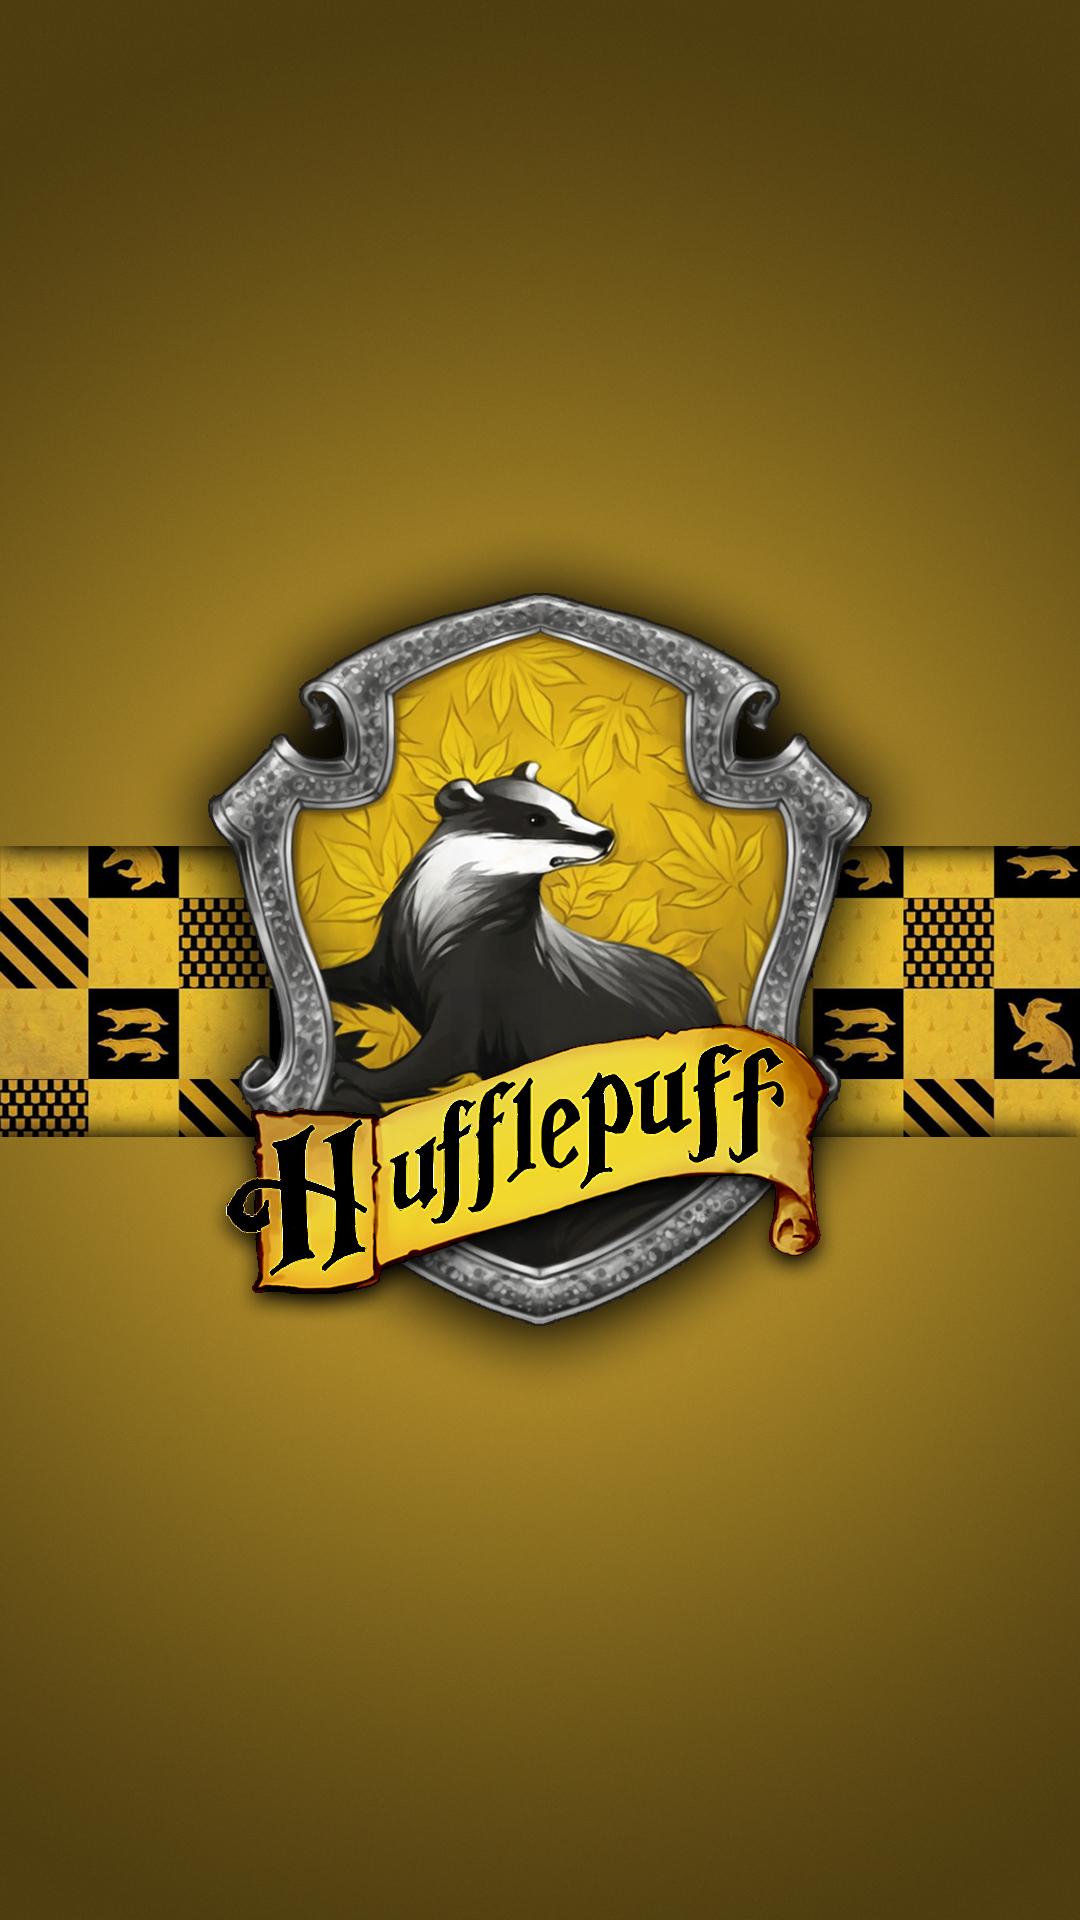 HD wallpaper, Harry Potter, Badger, Yellow Background, Portrait Display, Sigils, Typography, Hufflepuff